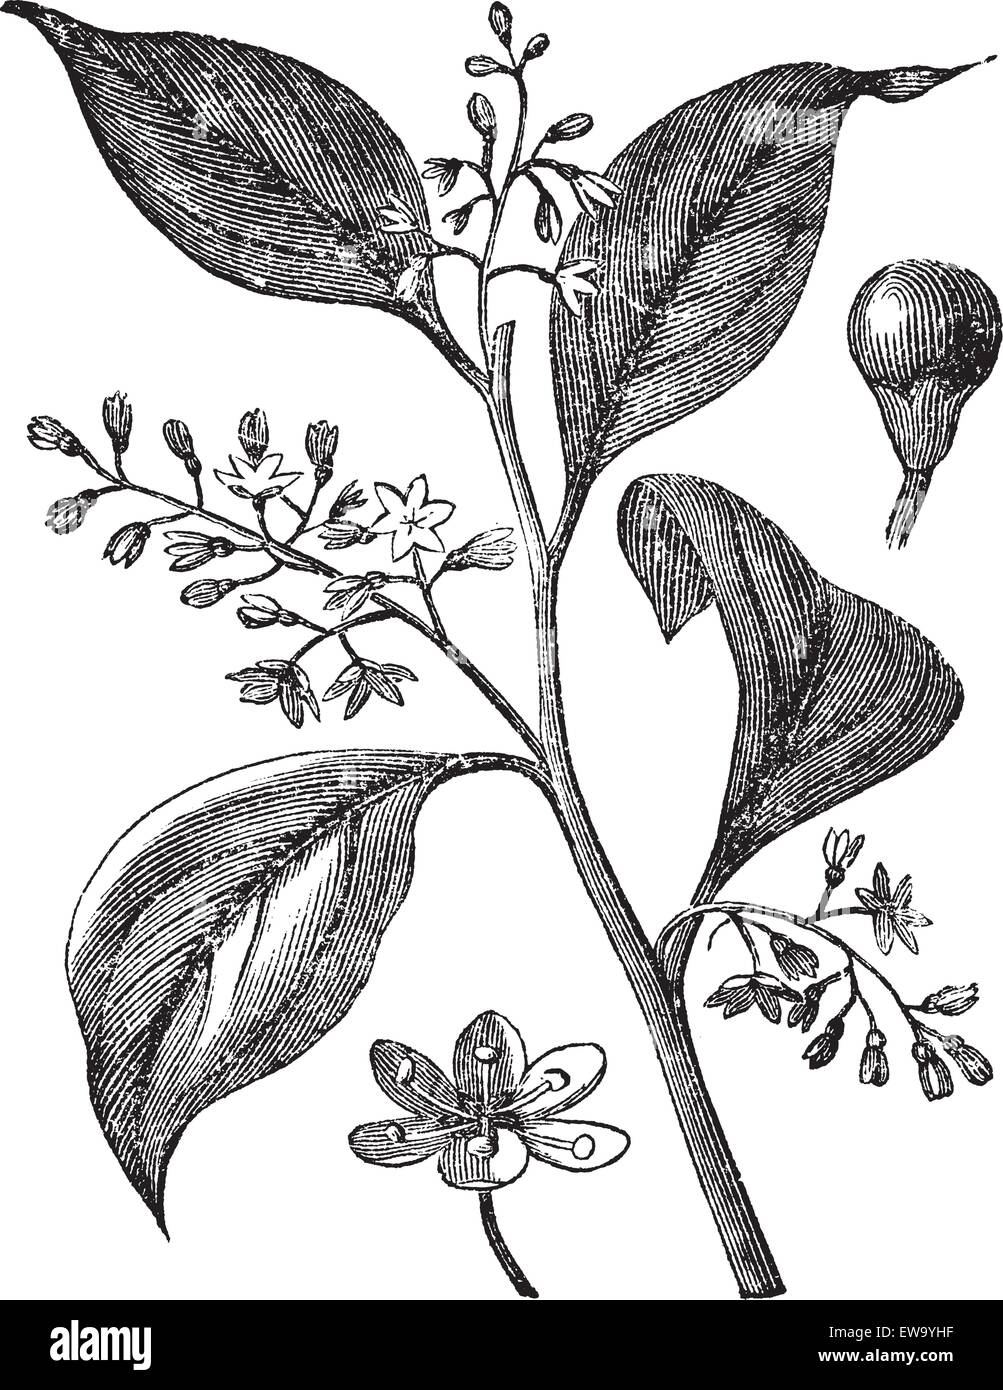 Camphrier officinal or Camphora officinarum or Medicinal plant vintage engraving. Old engraved illustration of camphor tree leaves and flowers. Stock Vector